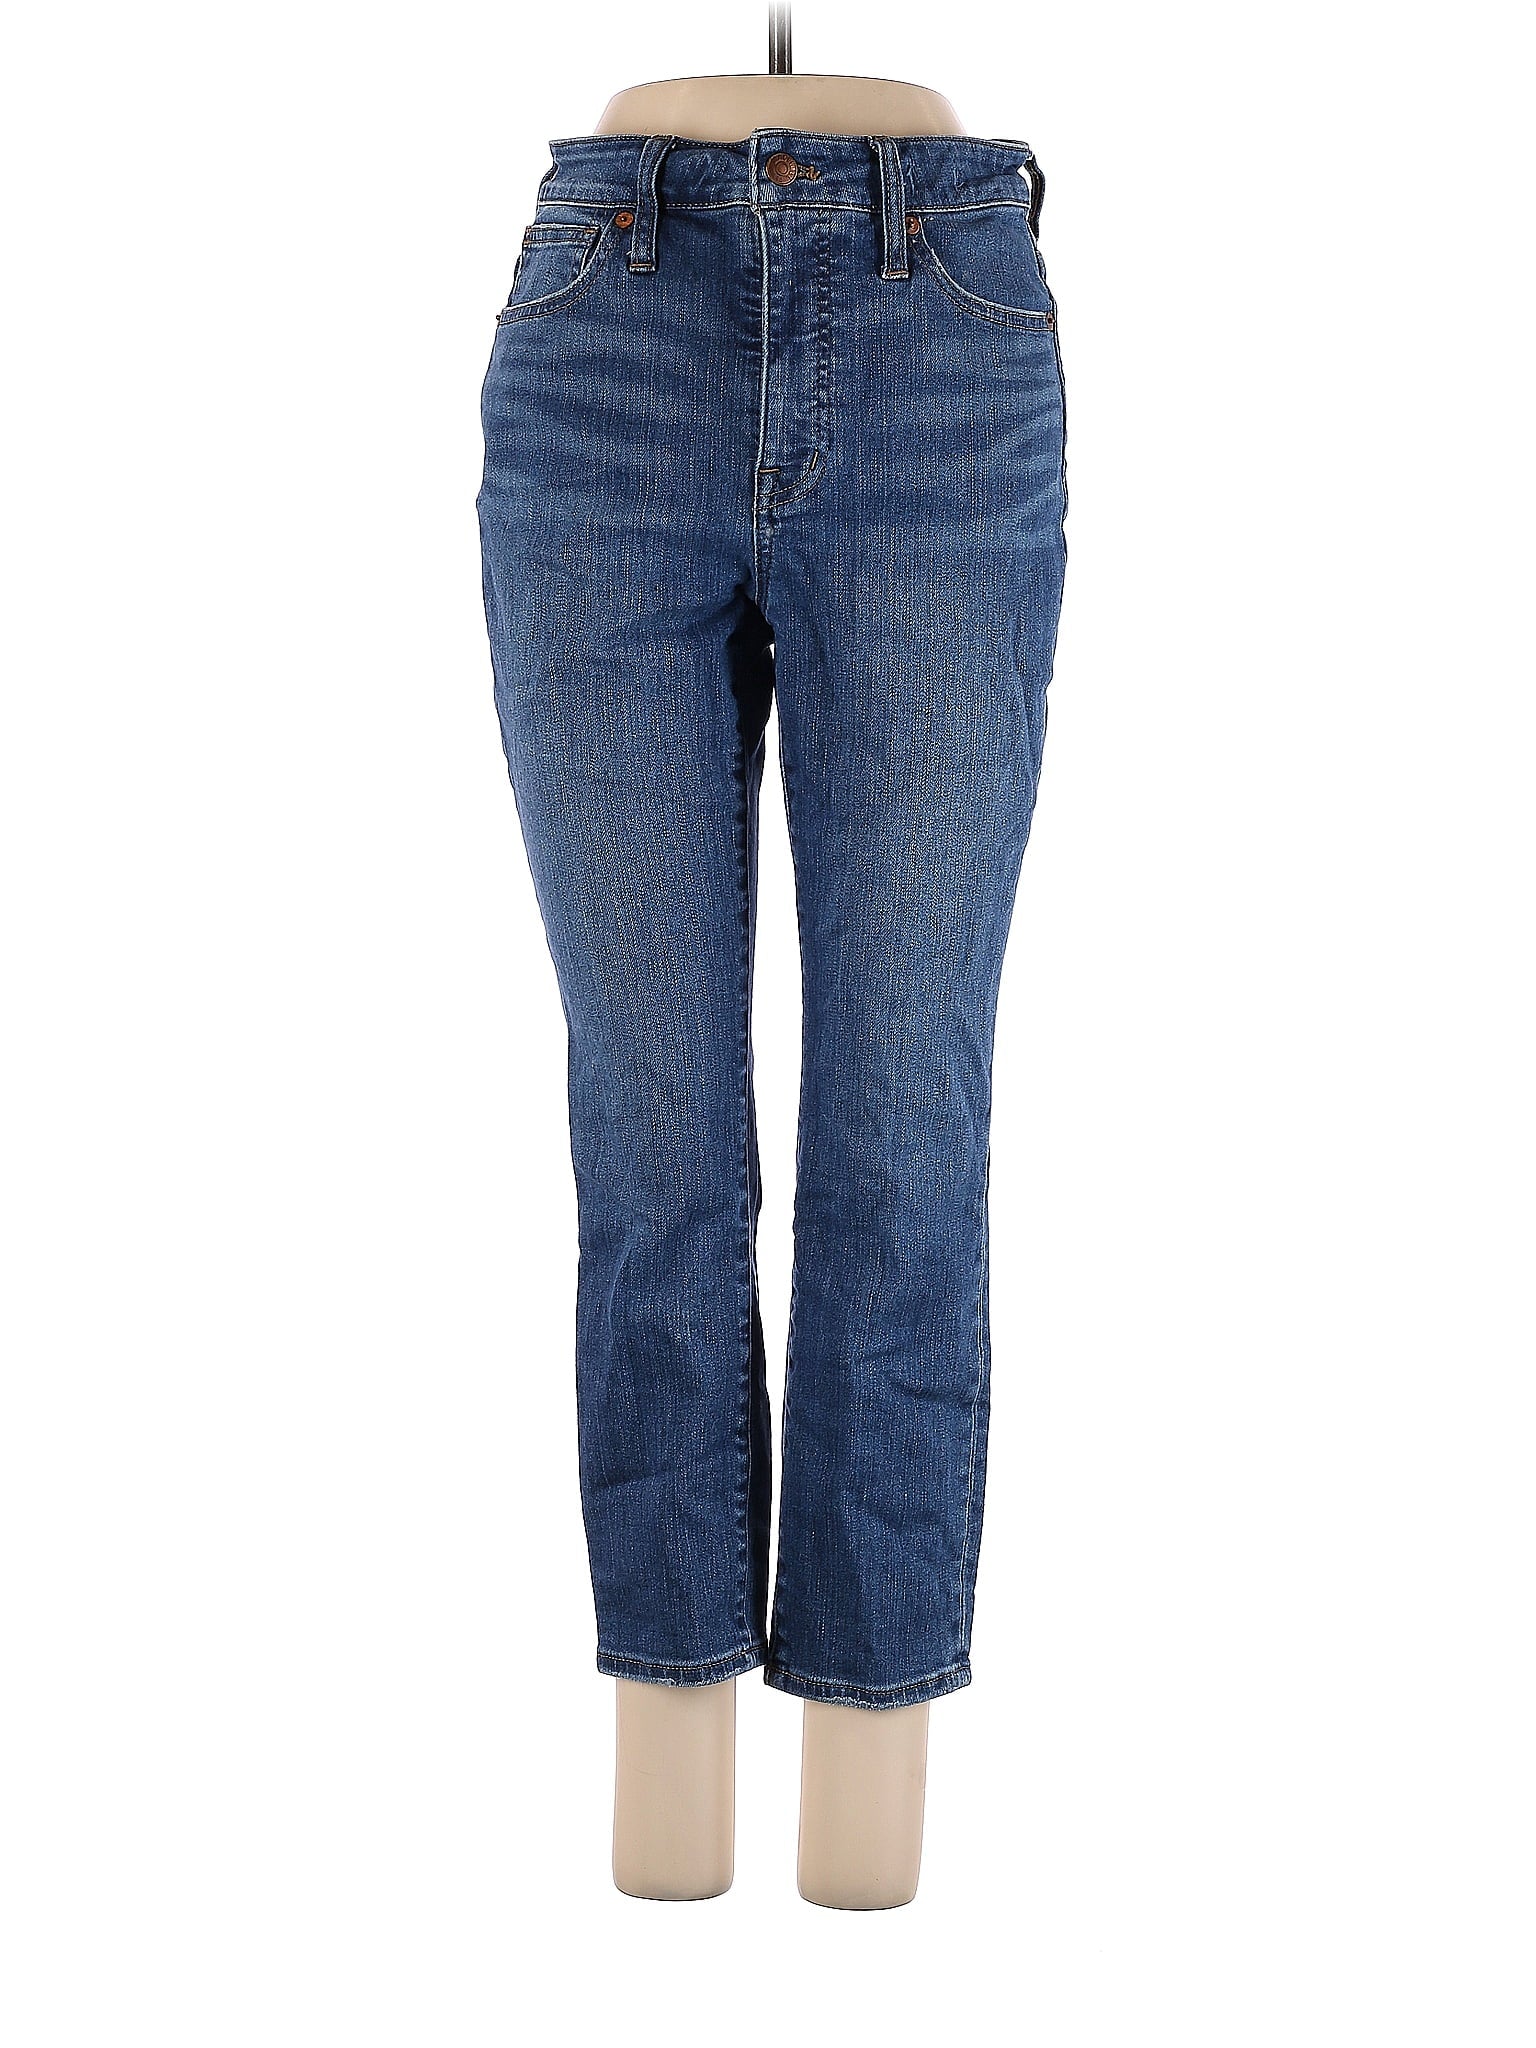 Mid-Rise Boyjeans Jeans in Dark Wash waist size - 25 P